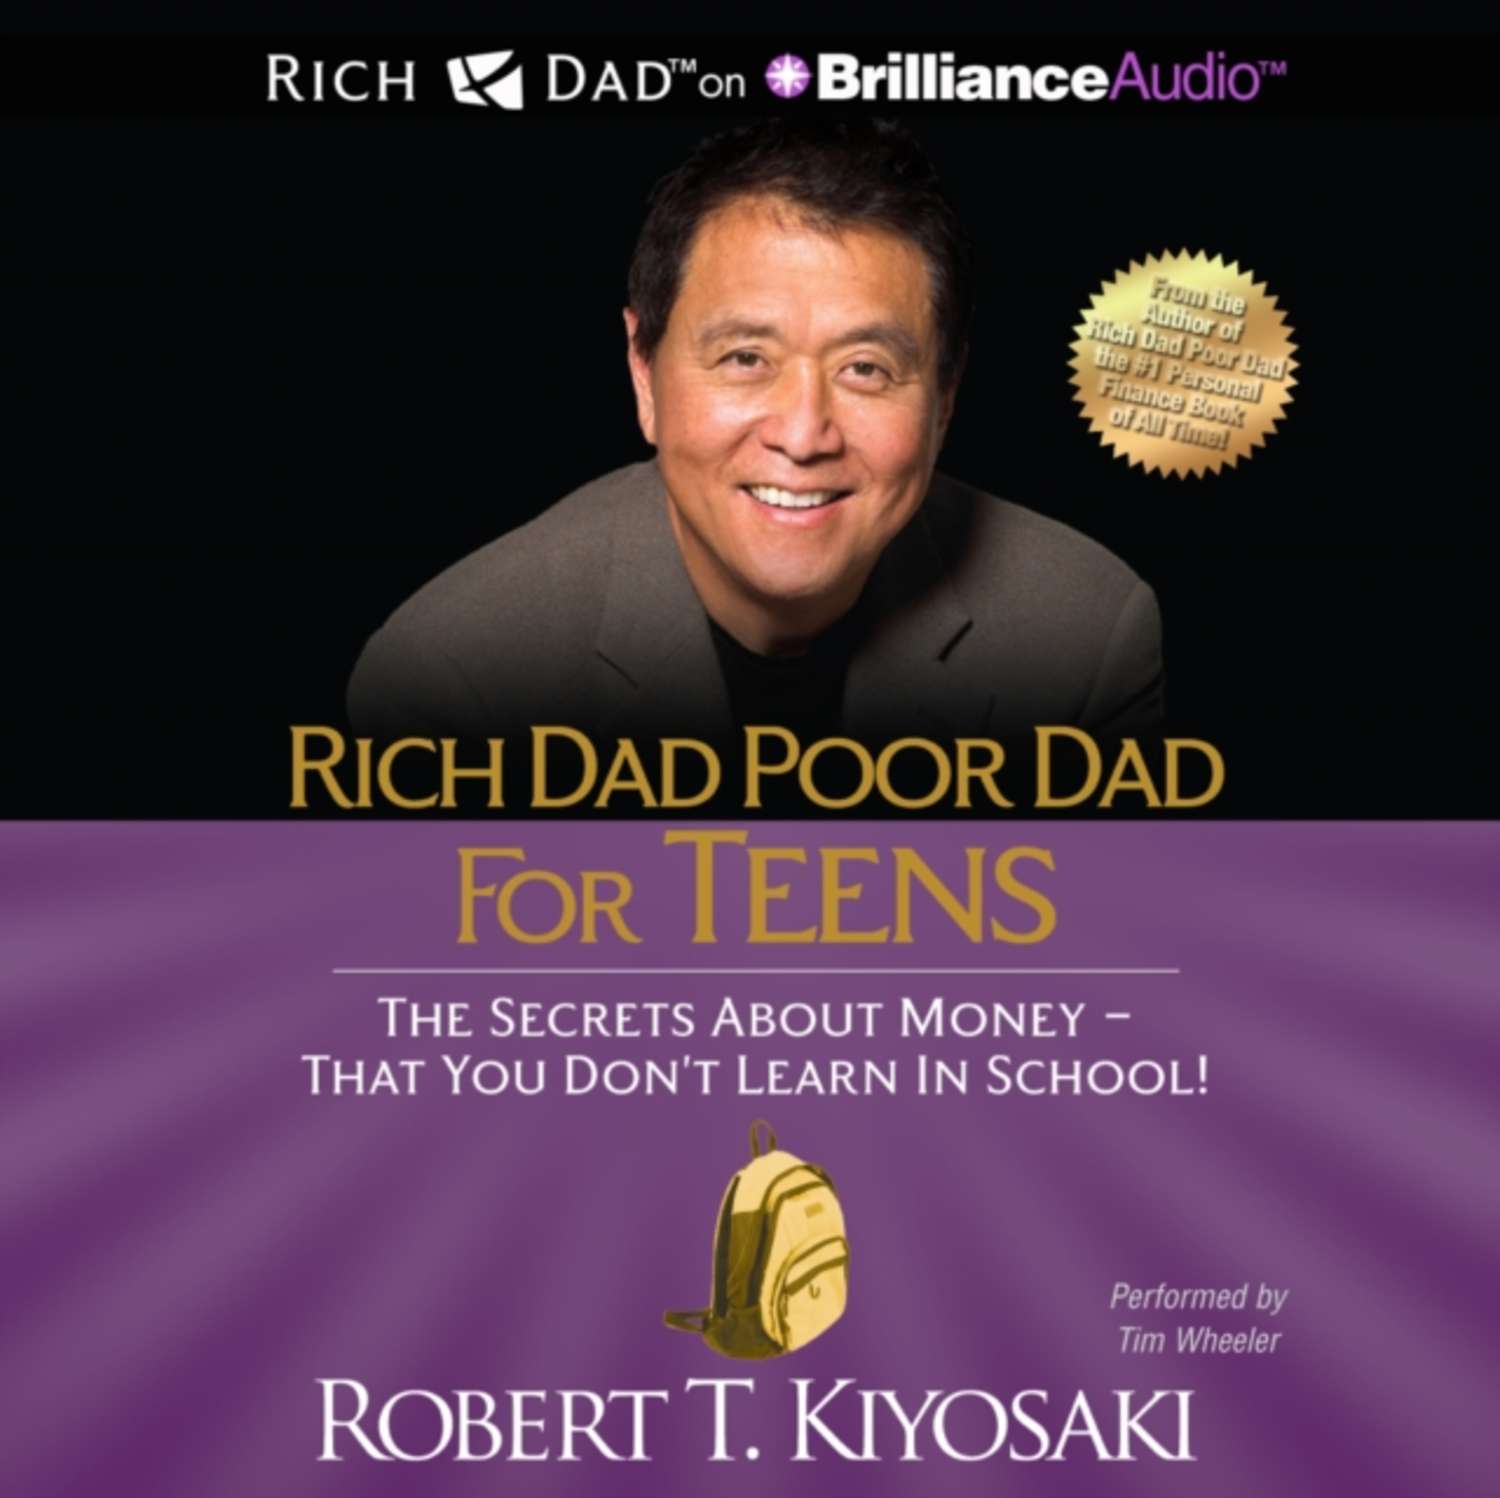 rich dad poor dad audiobook free mp3 download